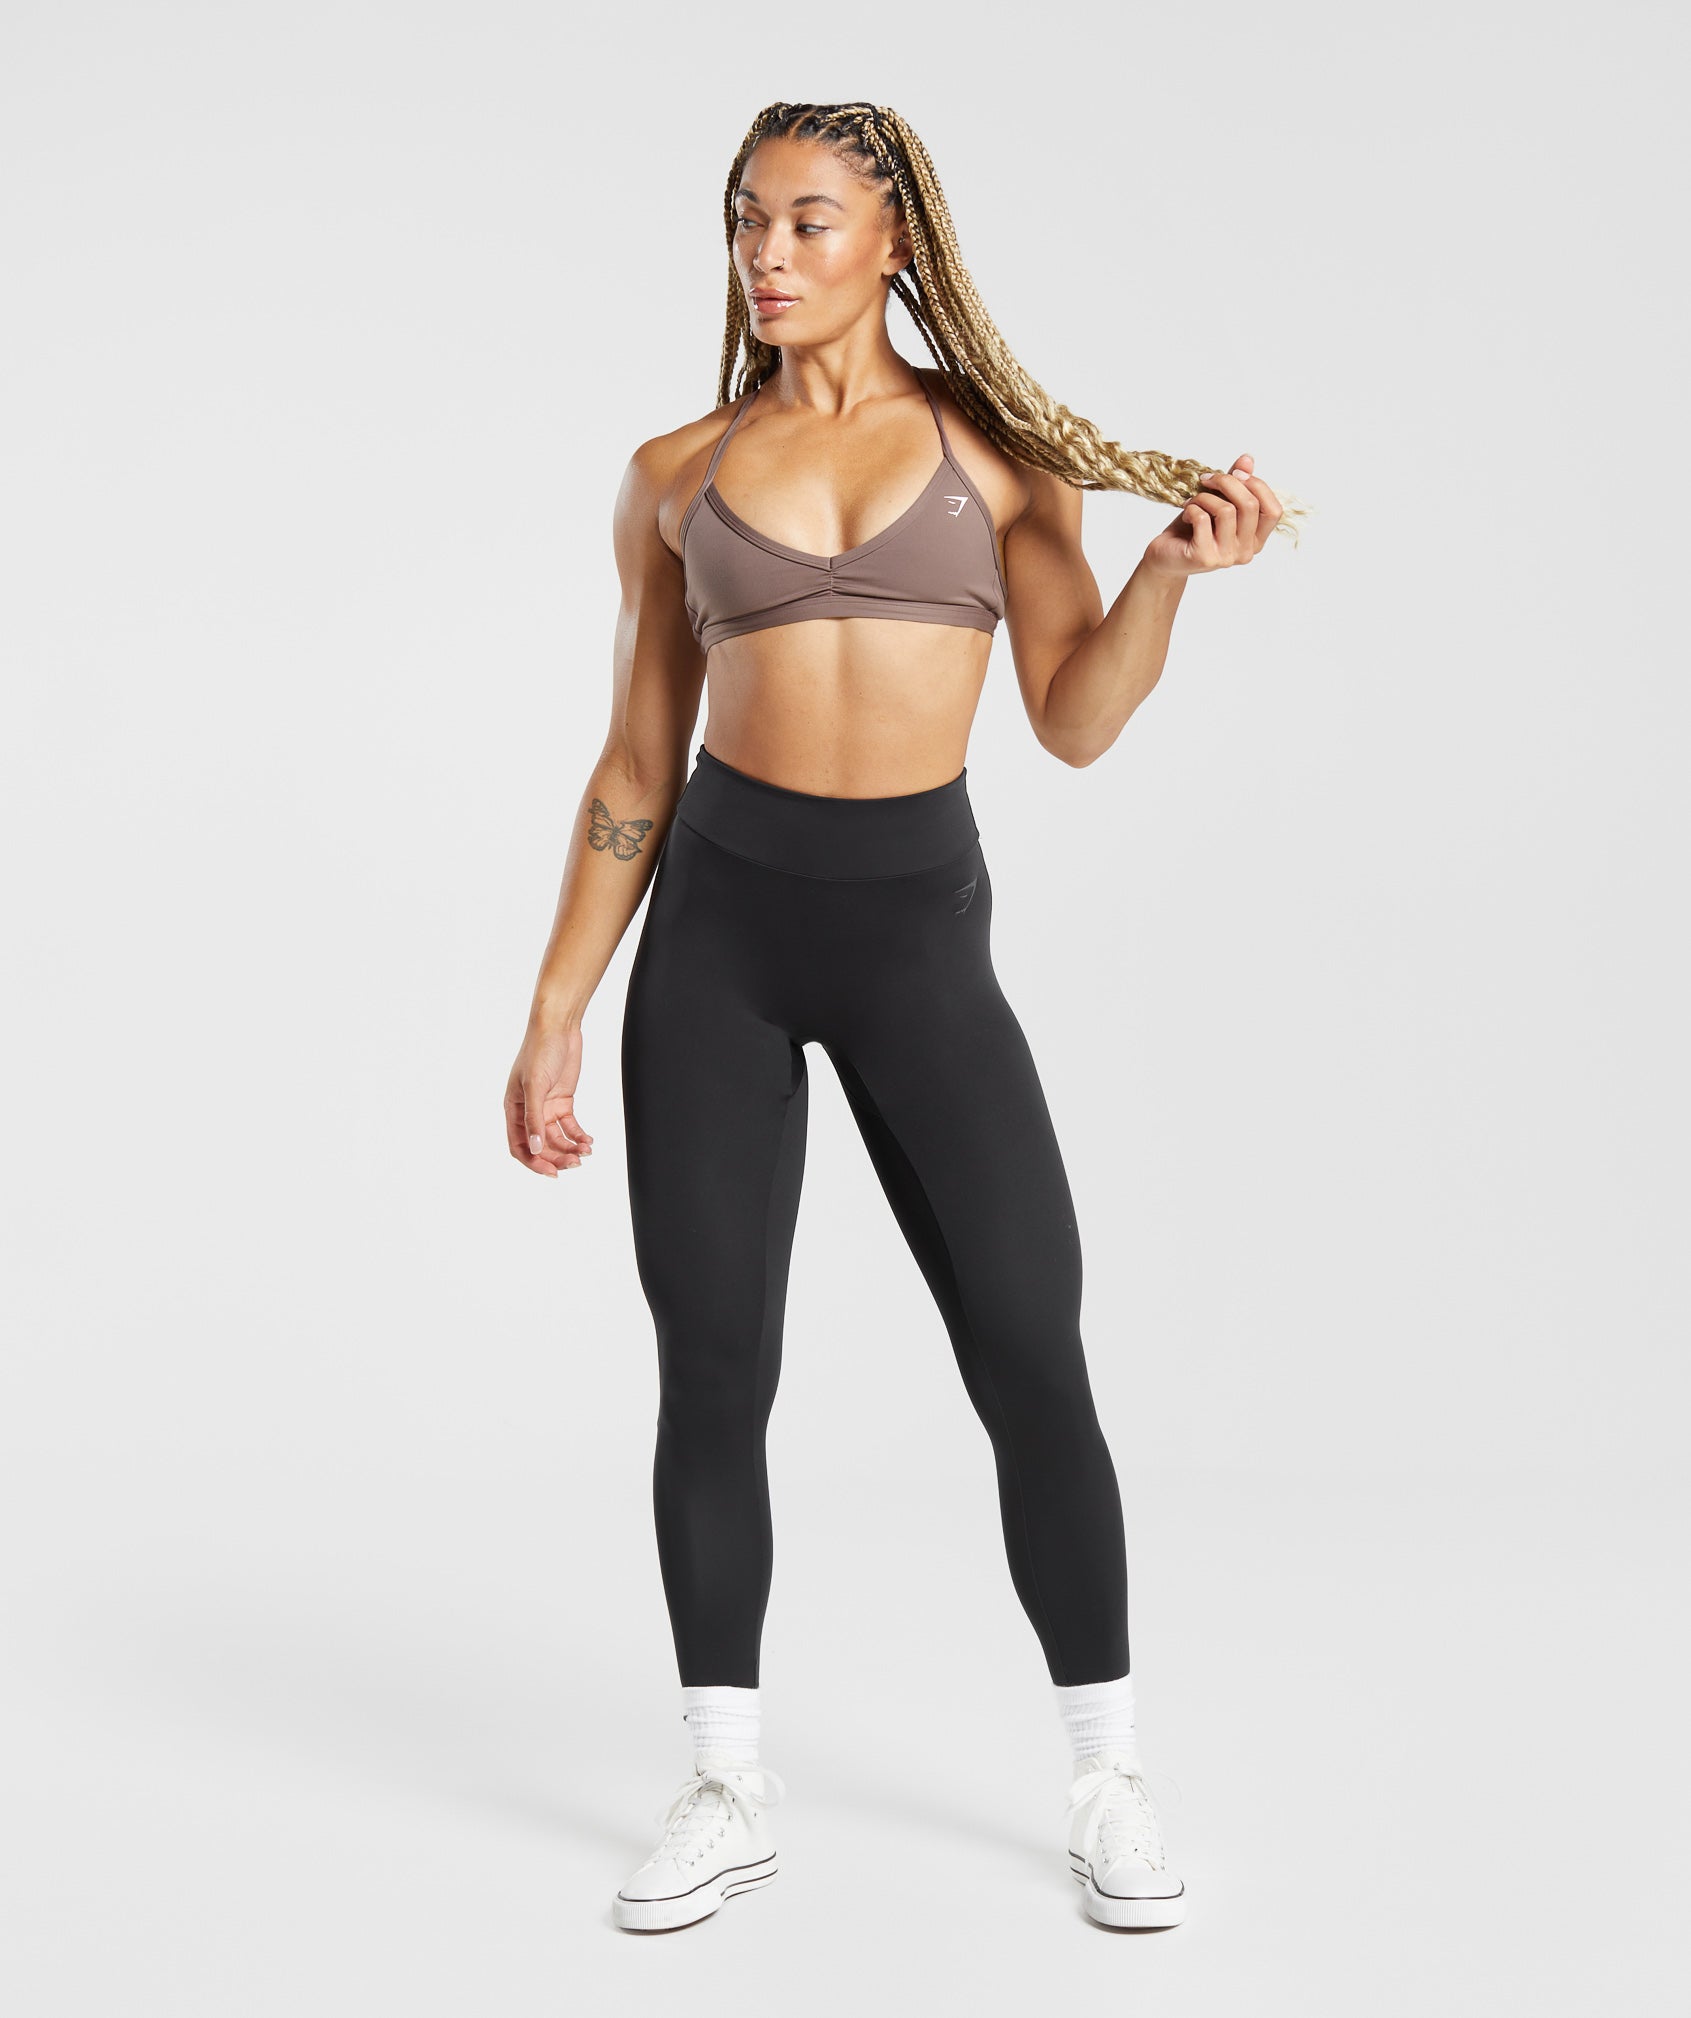 GYMSHARK Flex XS Women Sport Leggings Black Stretch Waistband Logo